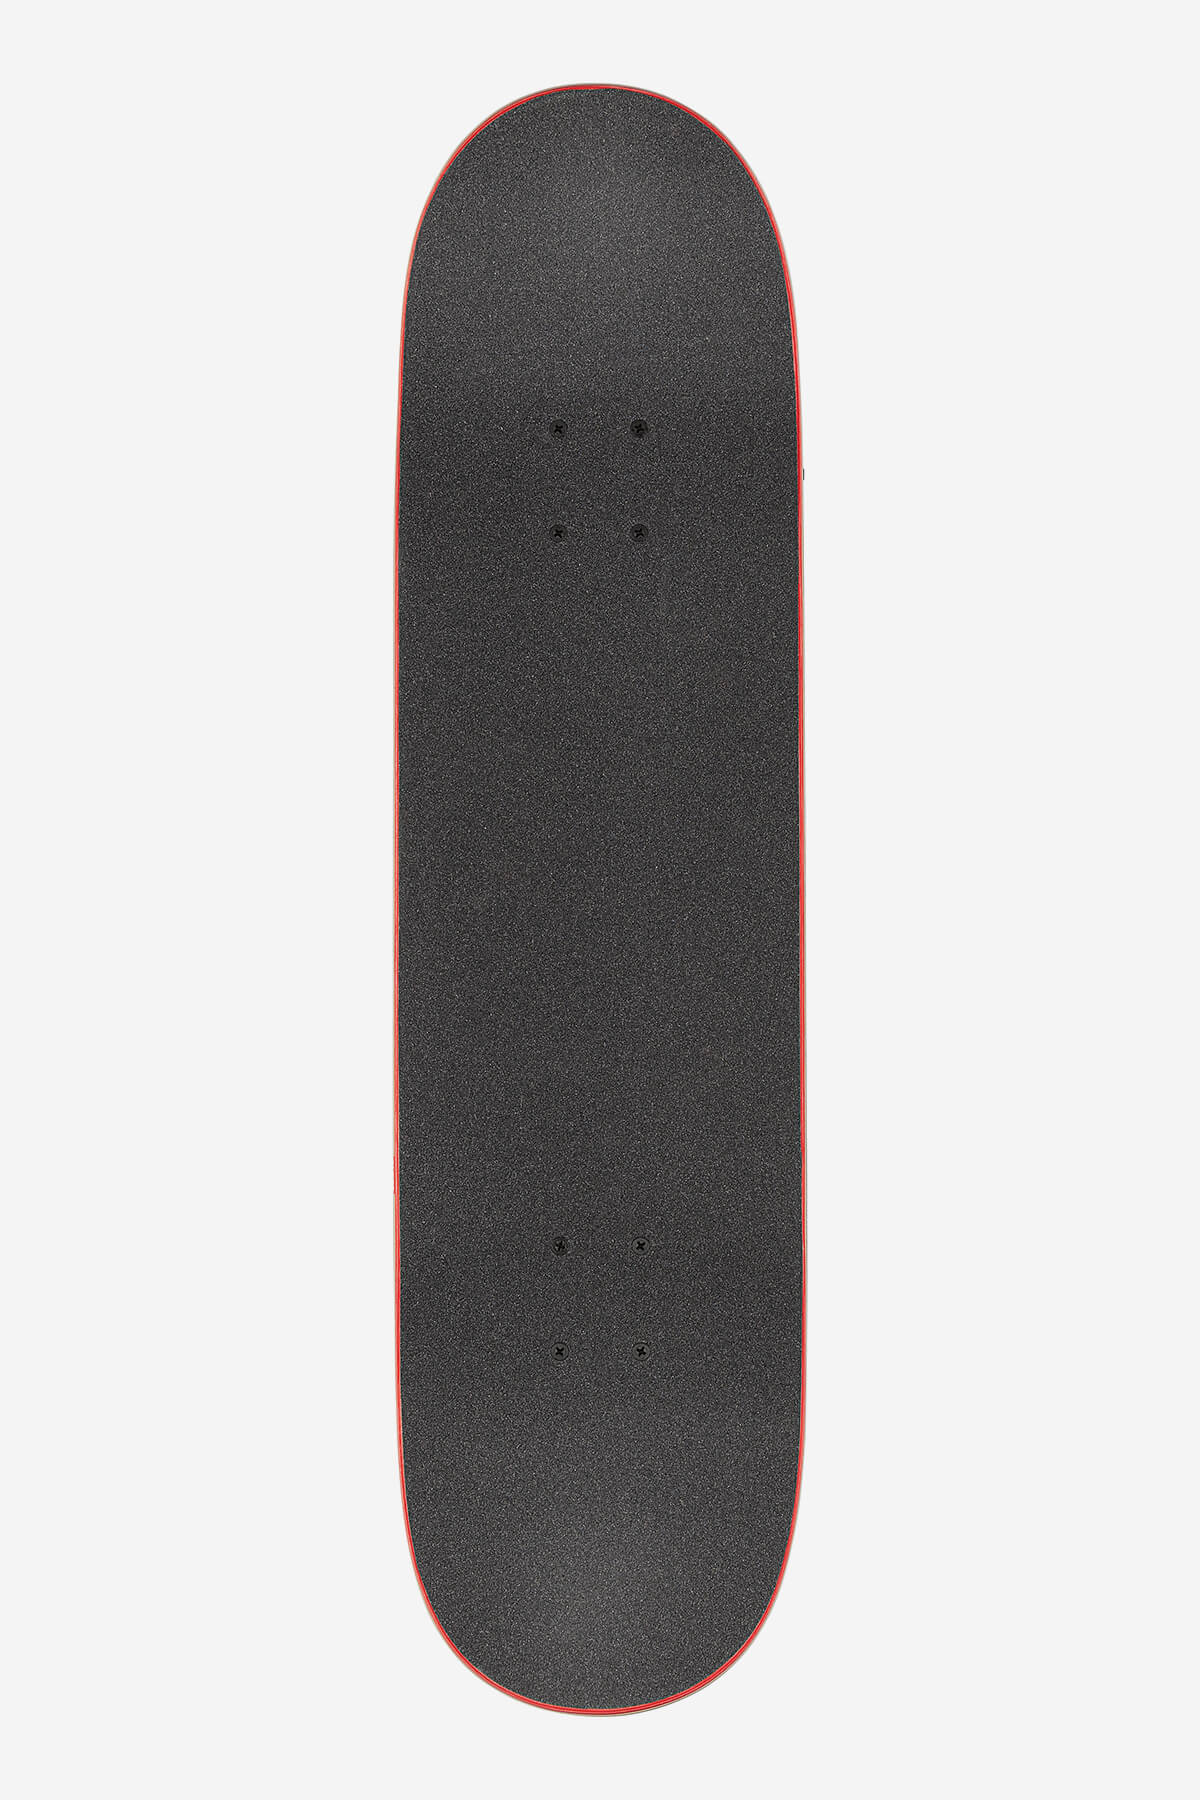 Globe - G1 Stack - Daydream - 8.25" Completo Skateboard